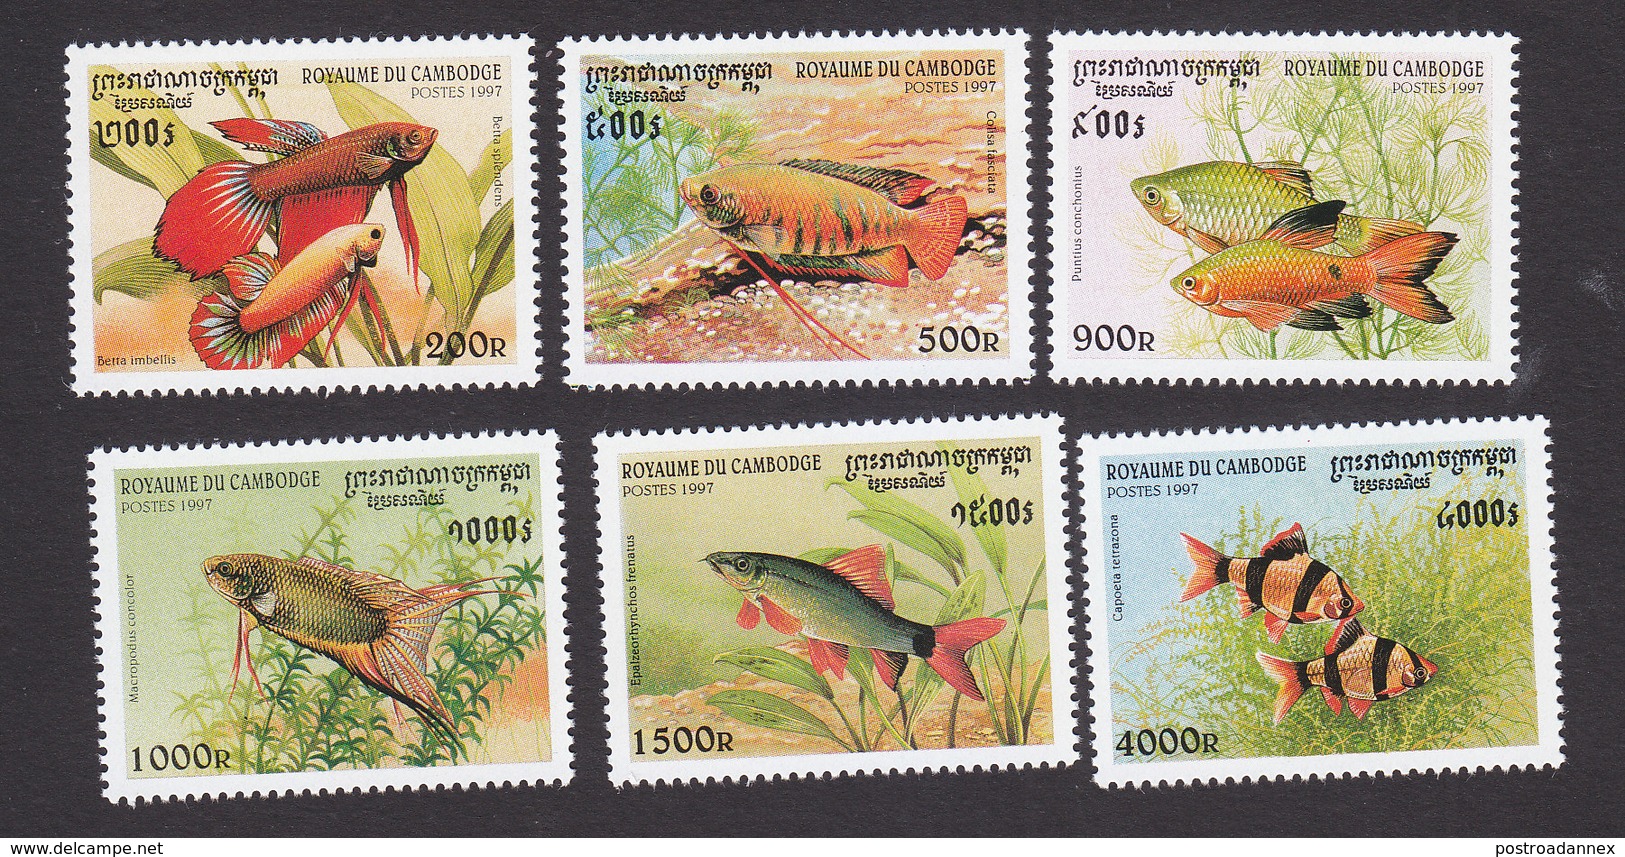 Cambodia, Scott #1669-1674, Mint Hinged, Fish, Issued 1997 - Cambodia